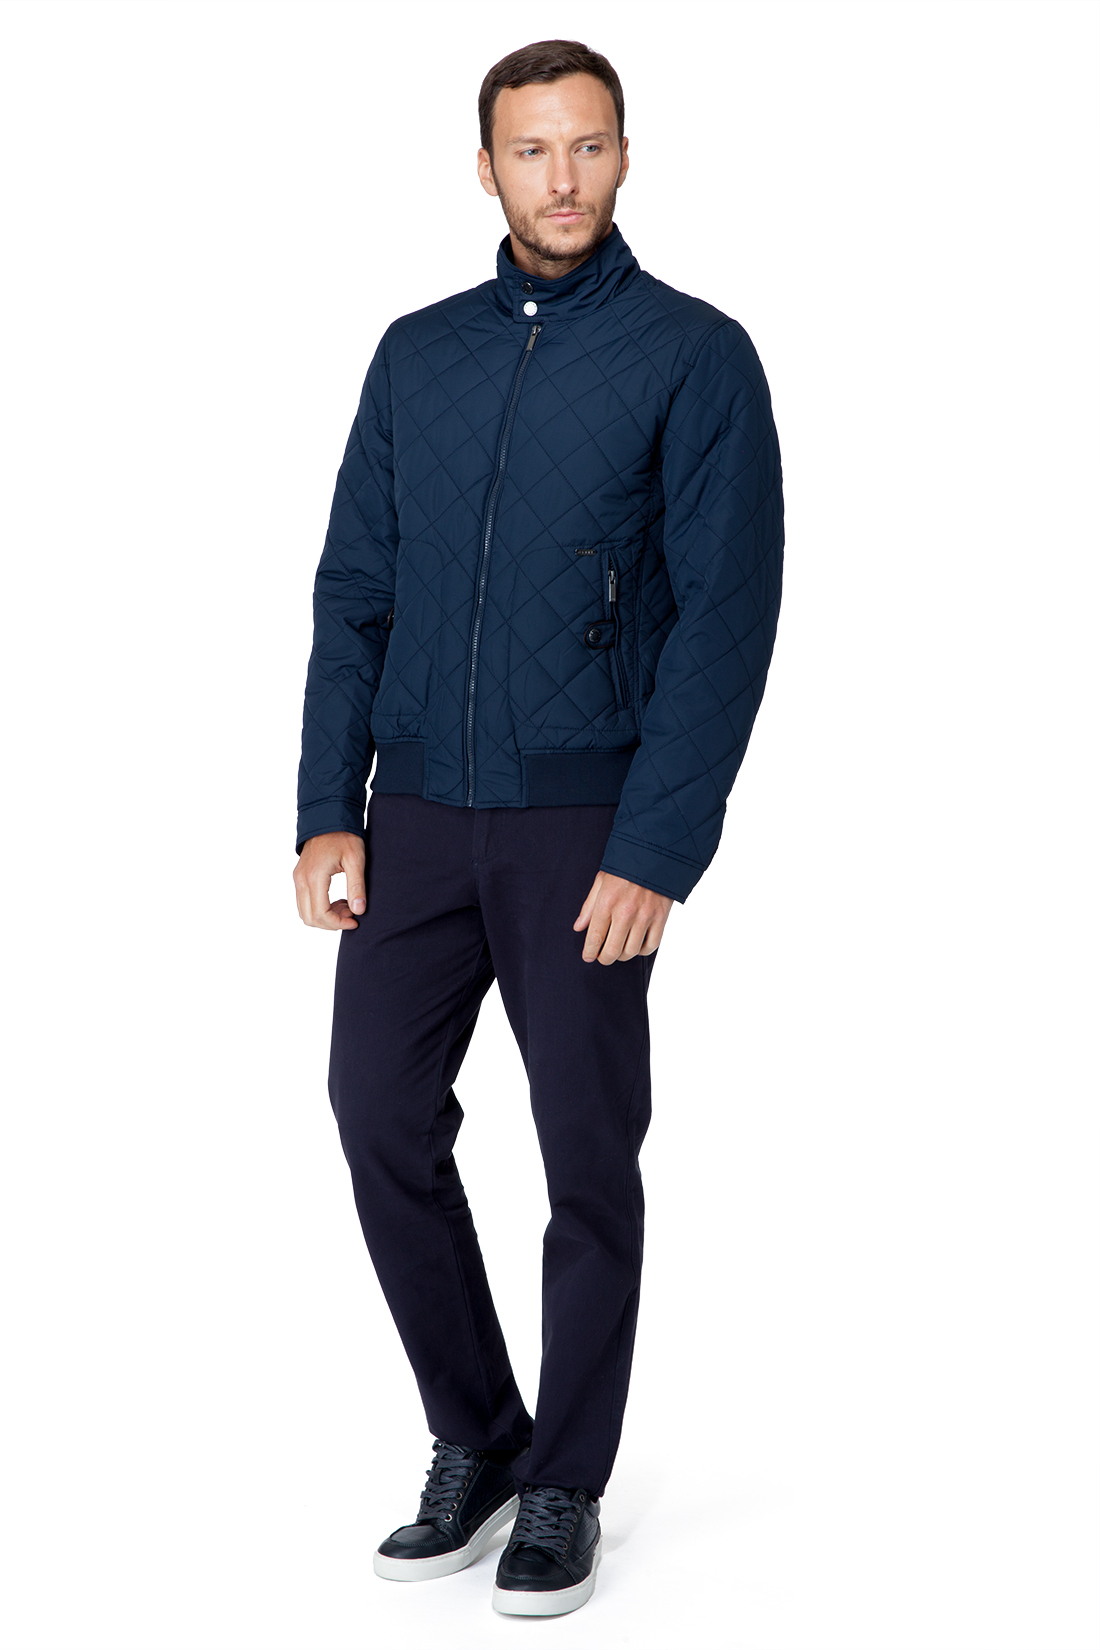 Стёганая куртка с резинкой-рибана (арт. baon B537018), размер XL, цвет синий Стёганая куртка с резинкой-рибана (арт. baon B537018) - фото 5